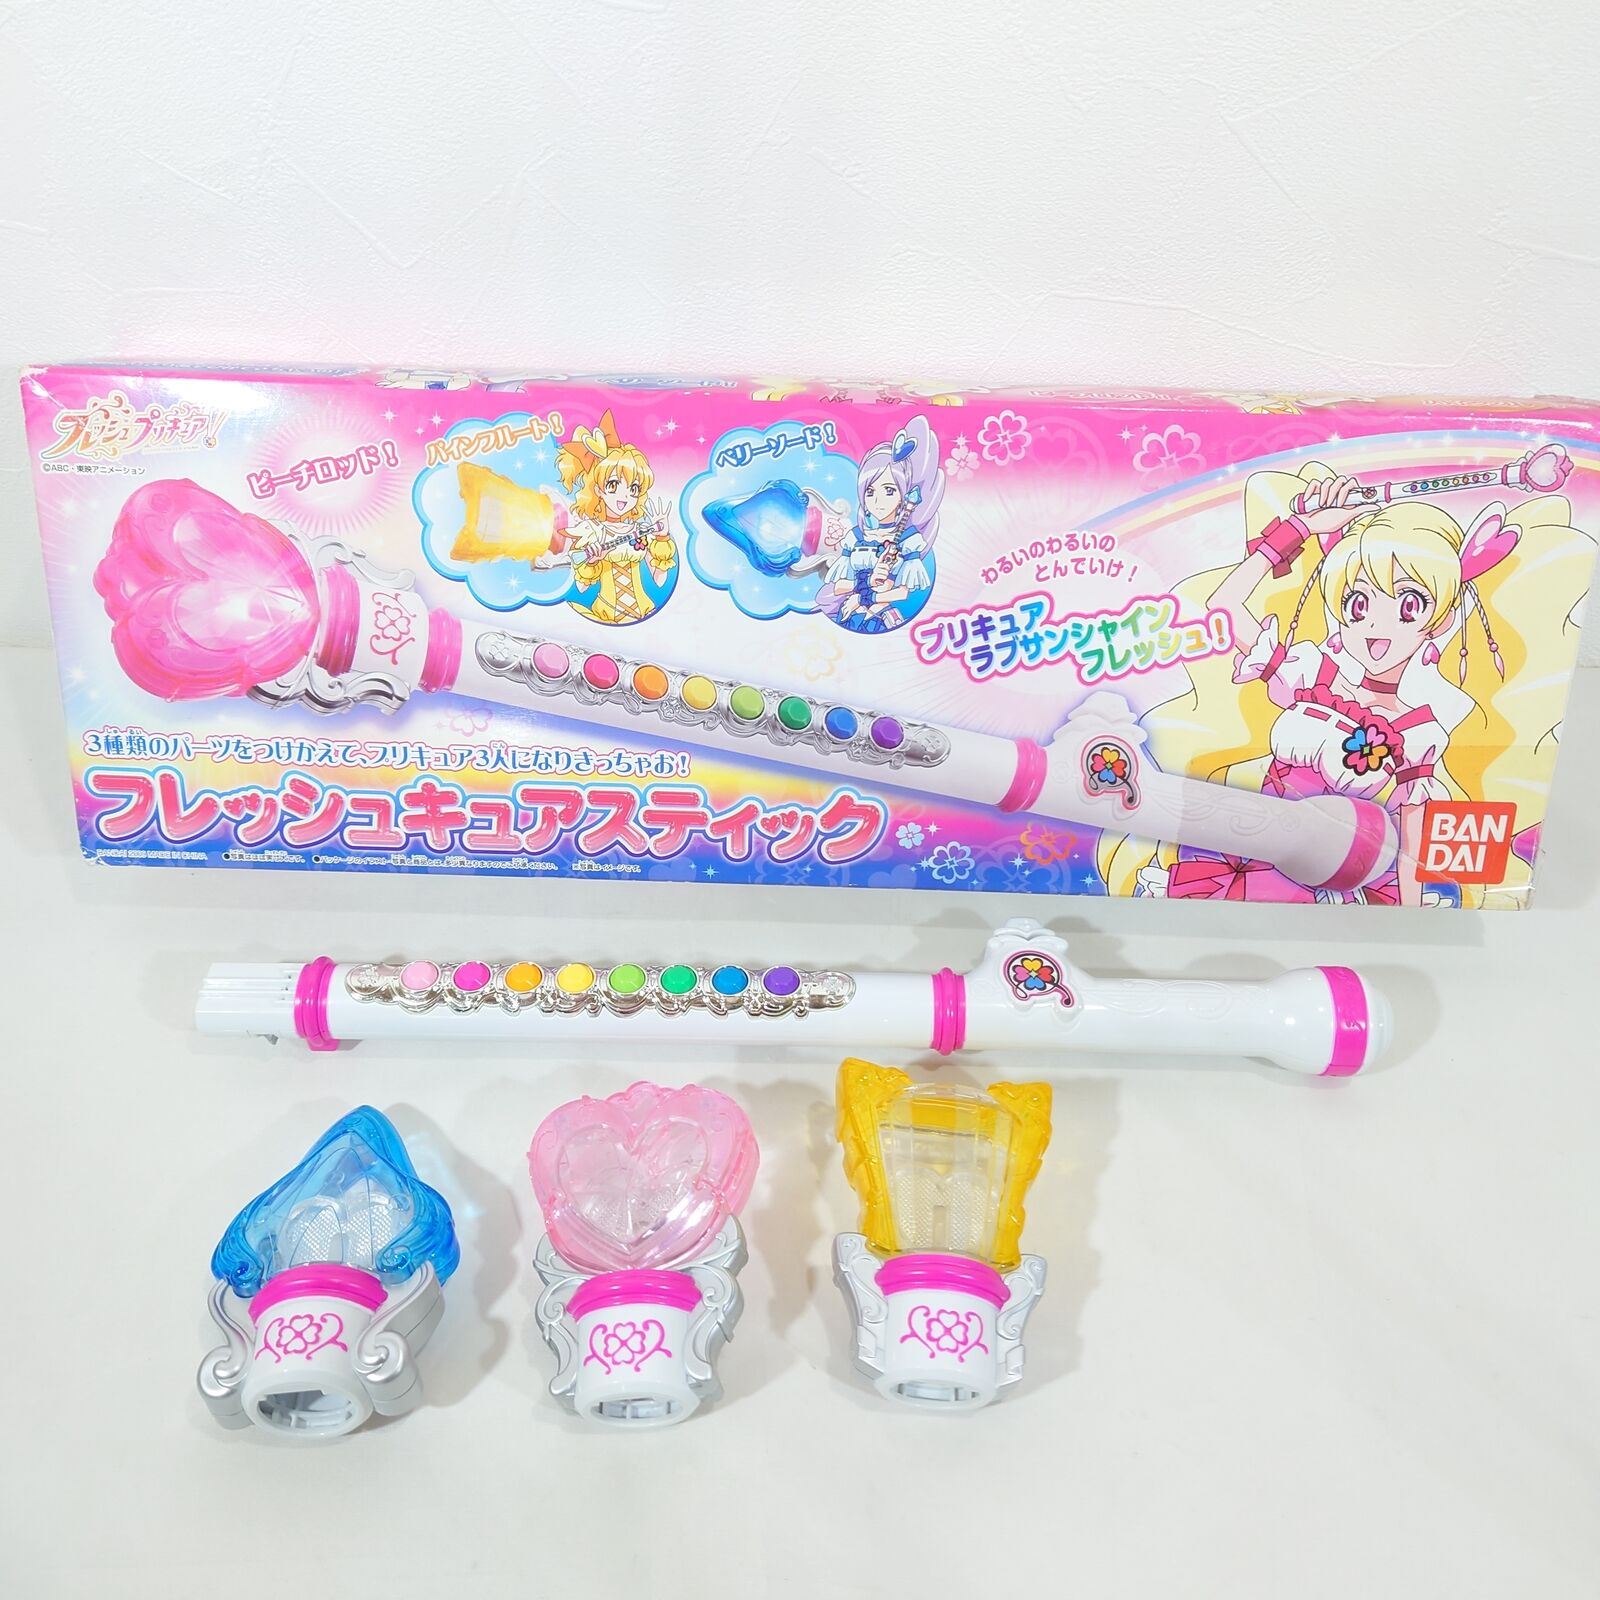 BANDAI Fresh Pretty Cure Fresh cure stick, Operation confirmed Japanese